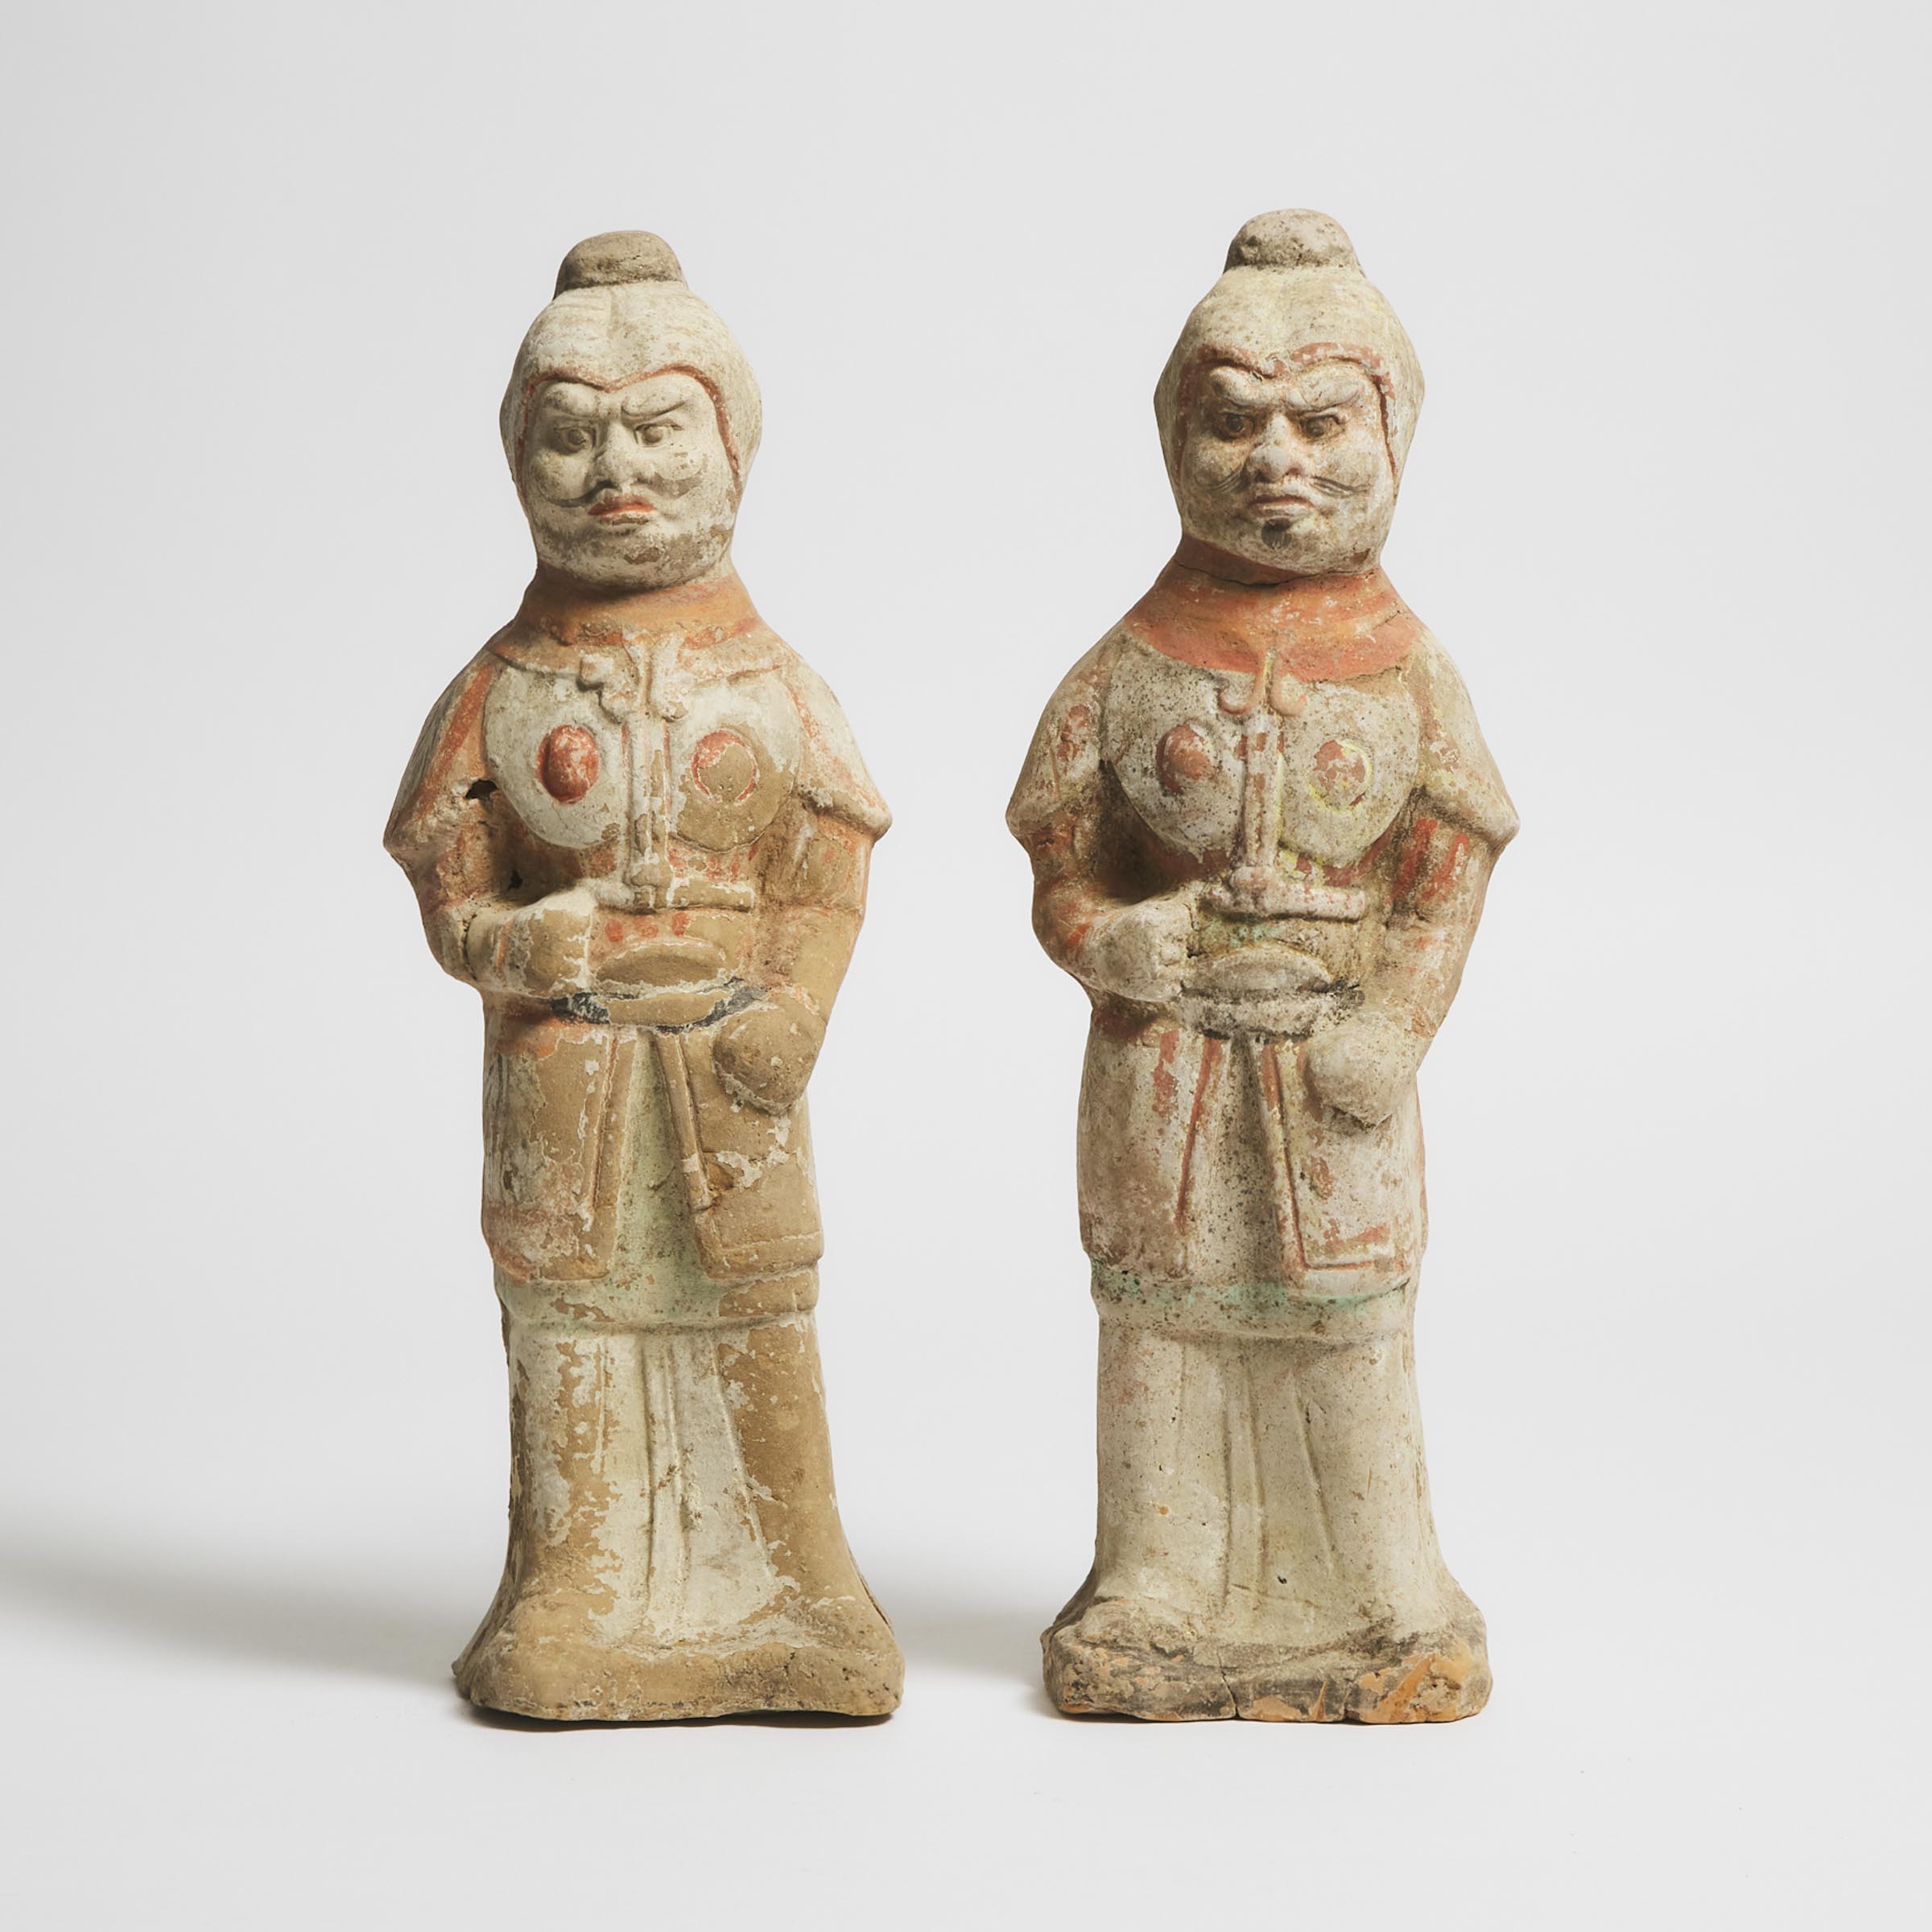 A Pair of Painted Pottery Lokapala Guardians, Han Dynasty (206 BC-AD 220)